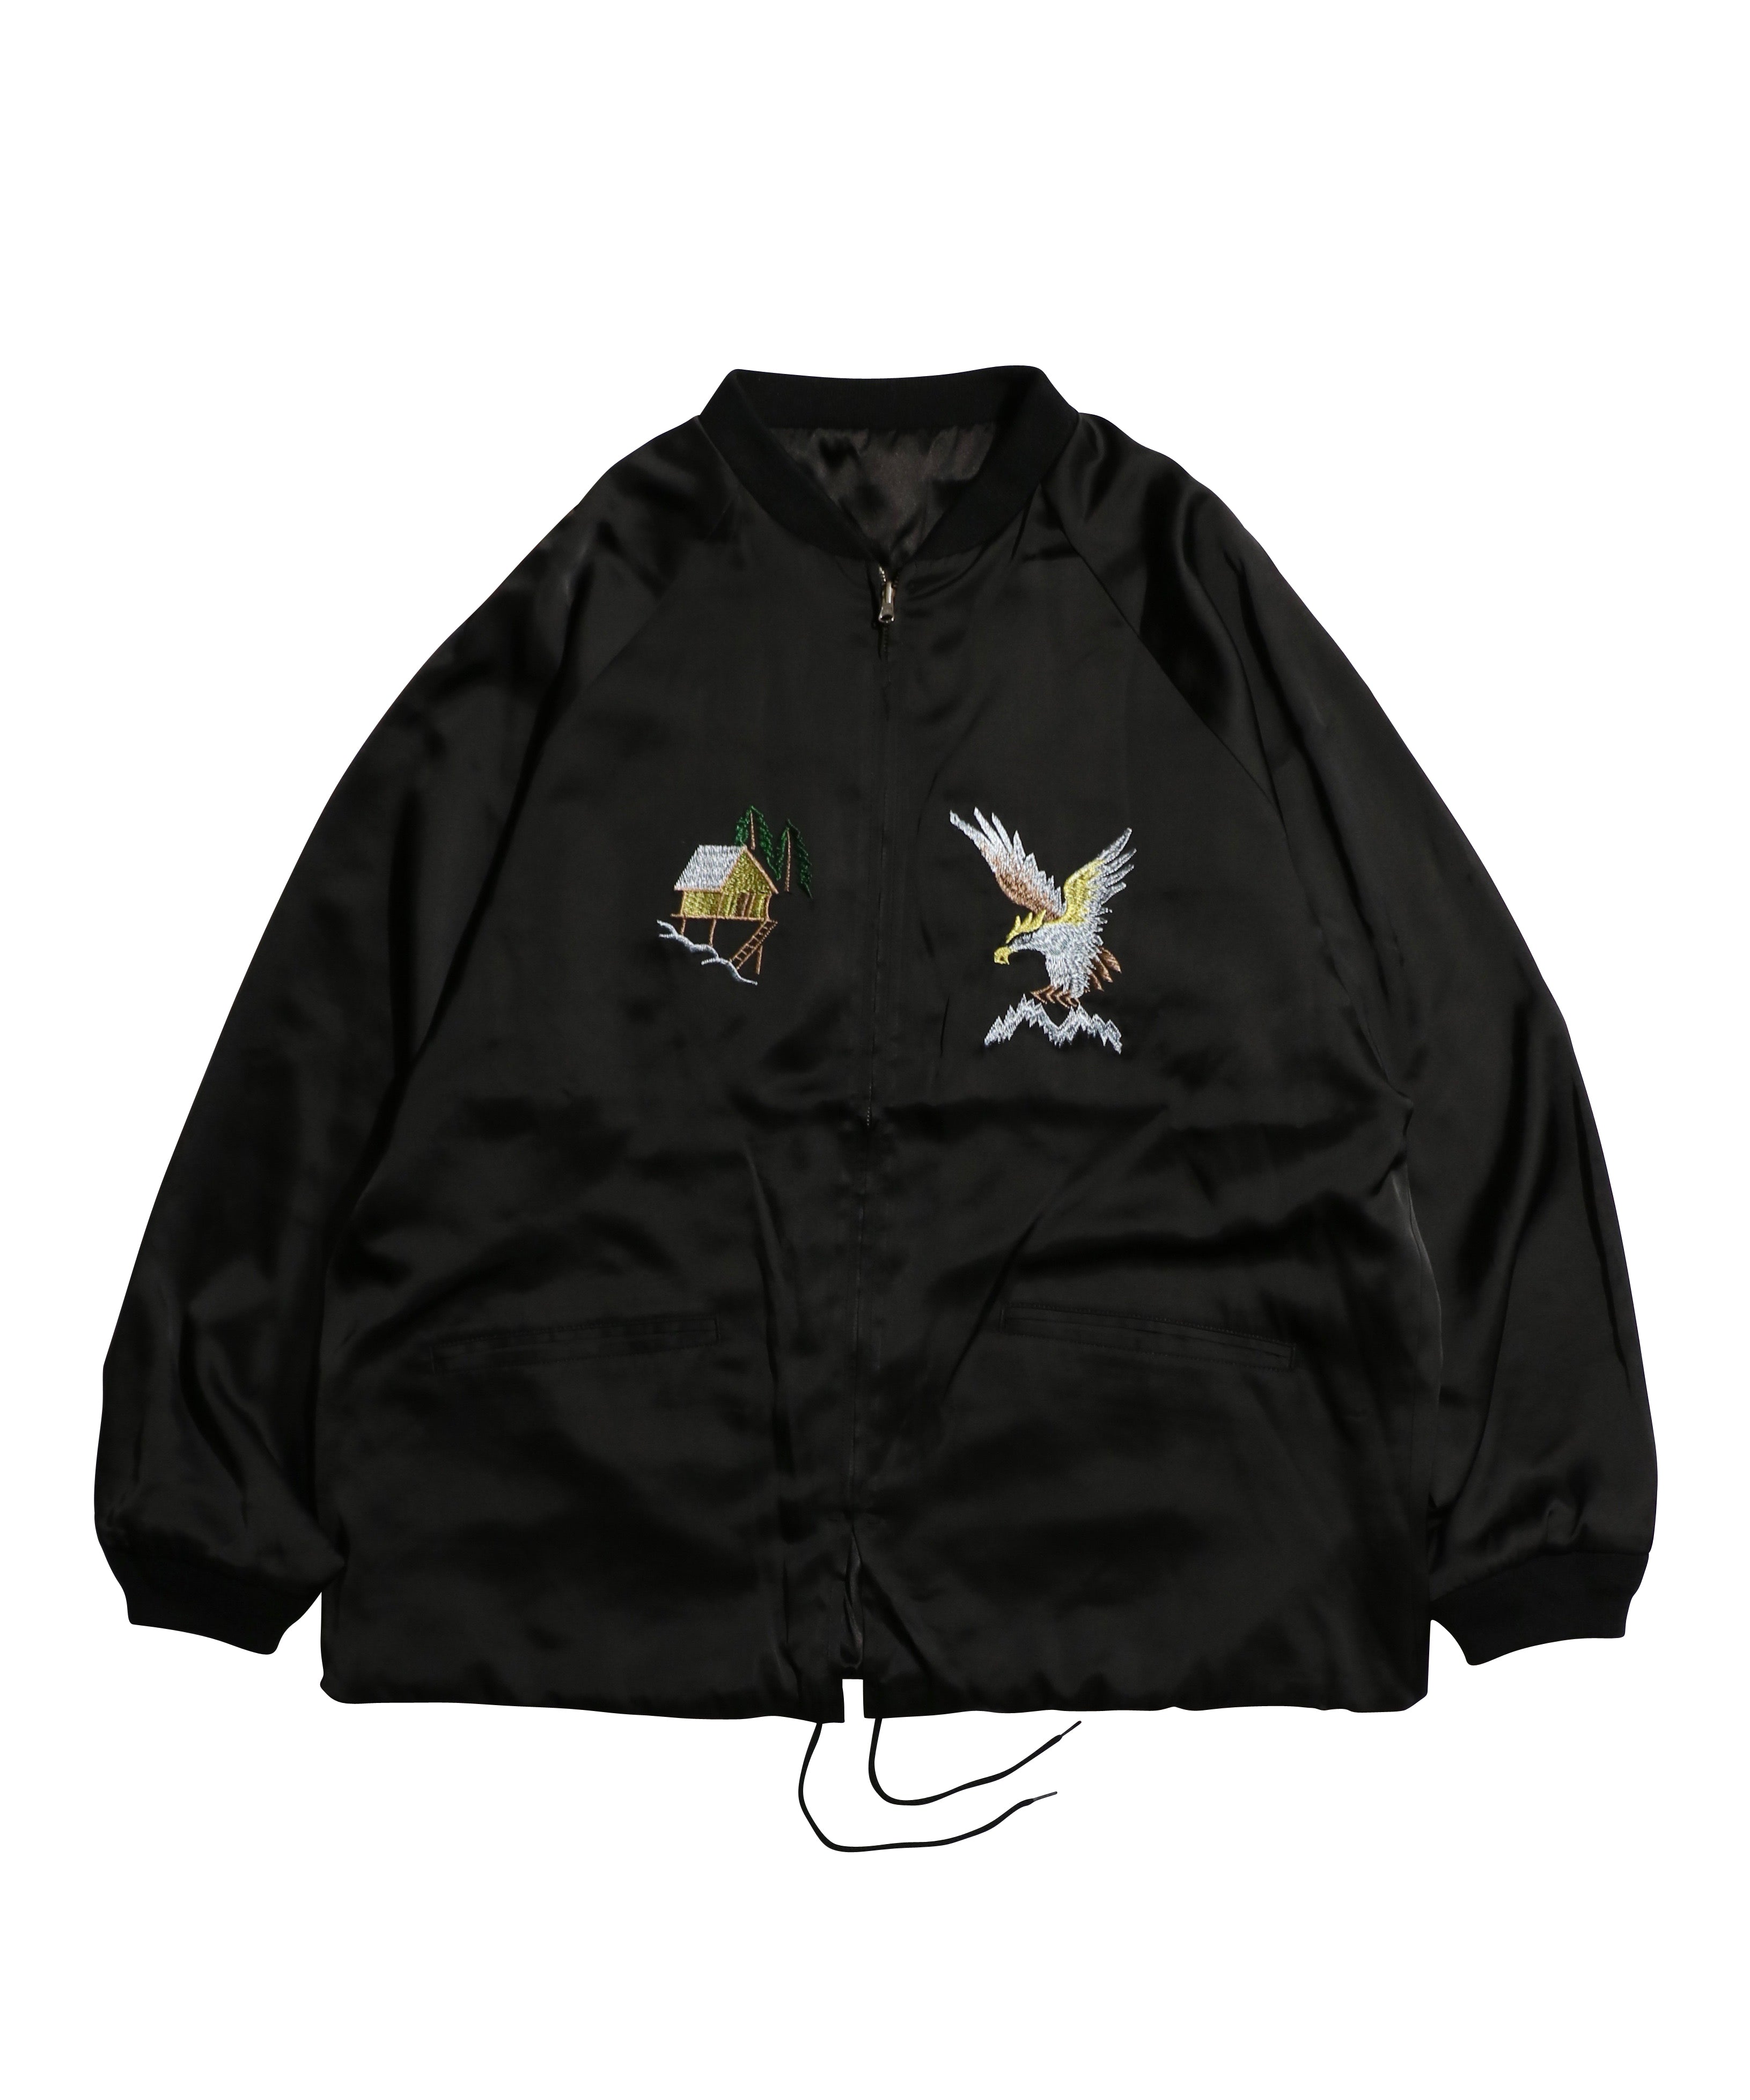 No:tl24s001 | Name:souver alaska jacket | Color:Black Sateen【THRIFTY LOOK_スリフティールック】【入荷予定アイテム・入荷連絡可能】